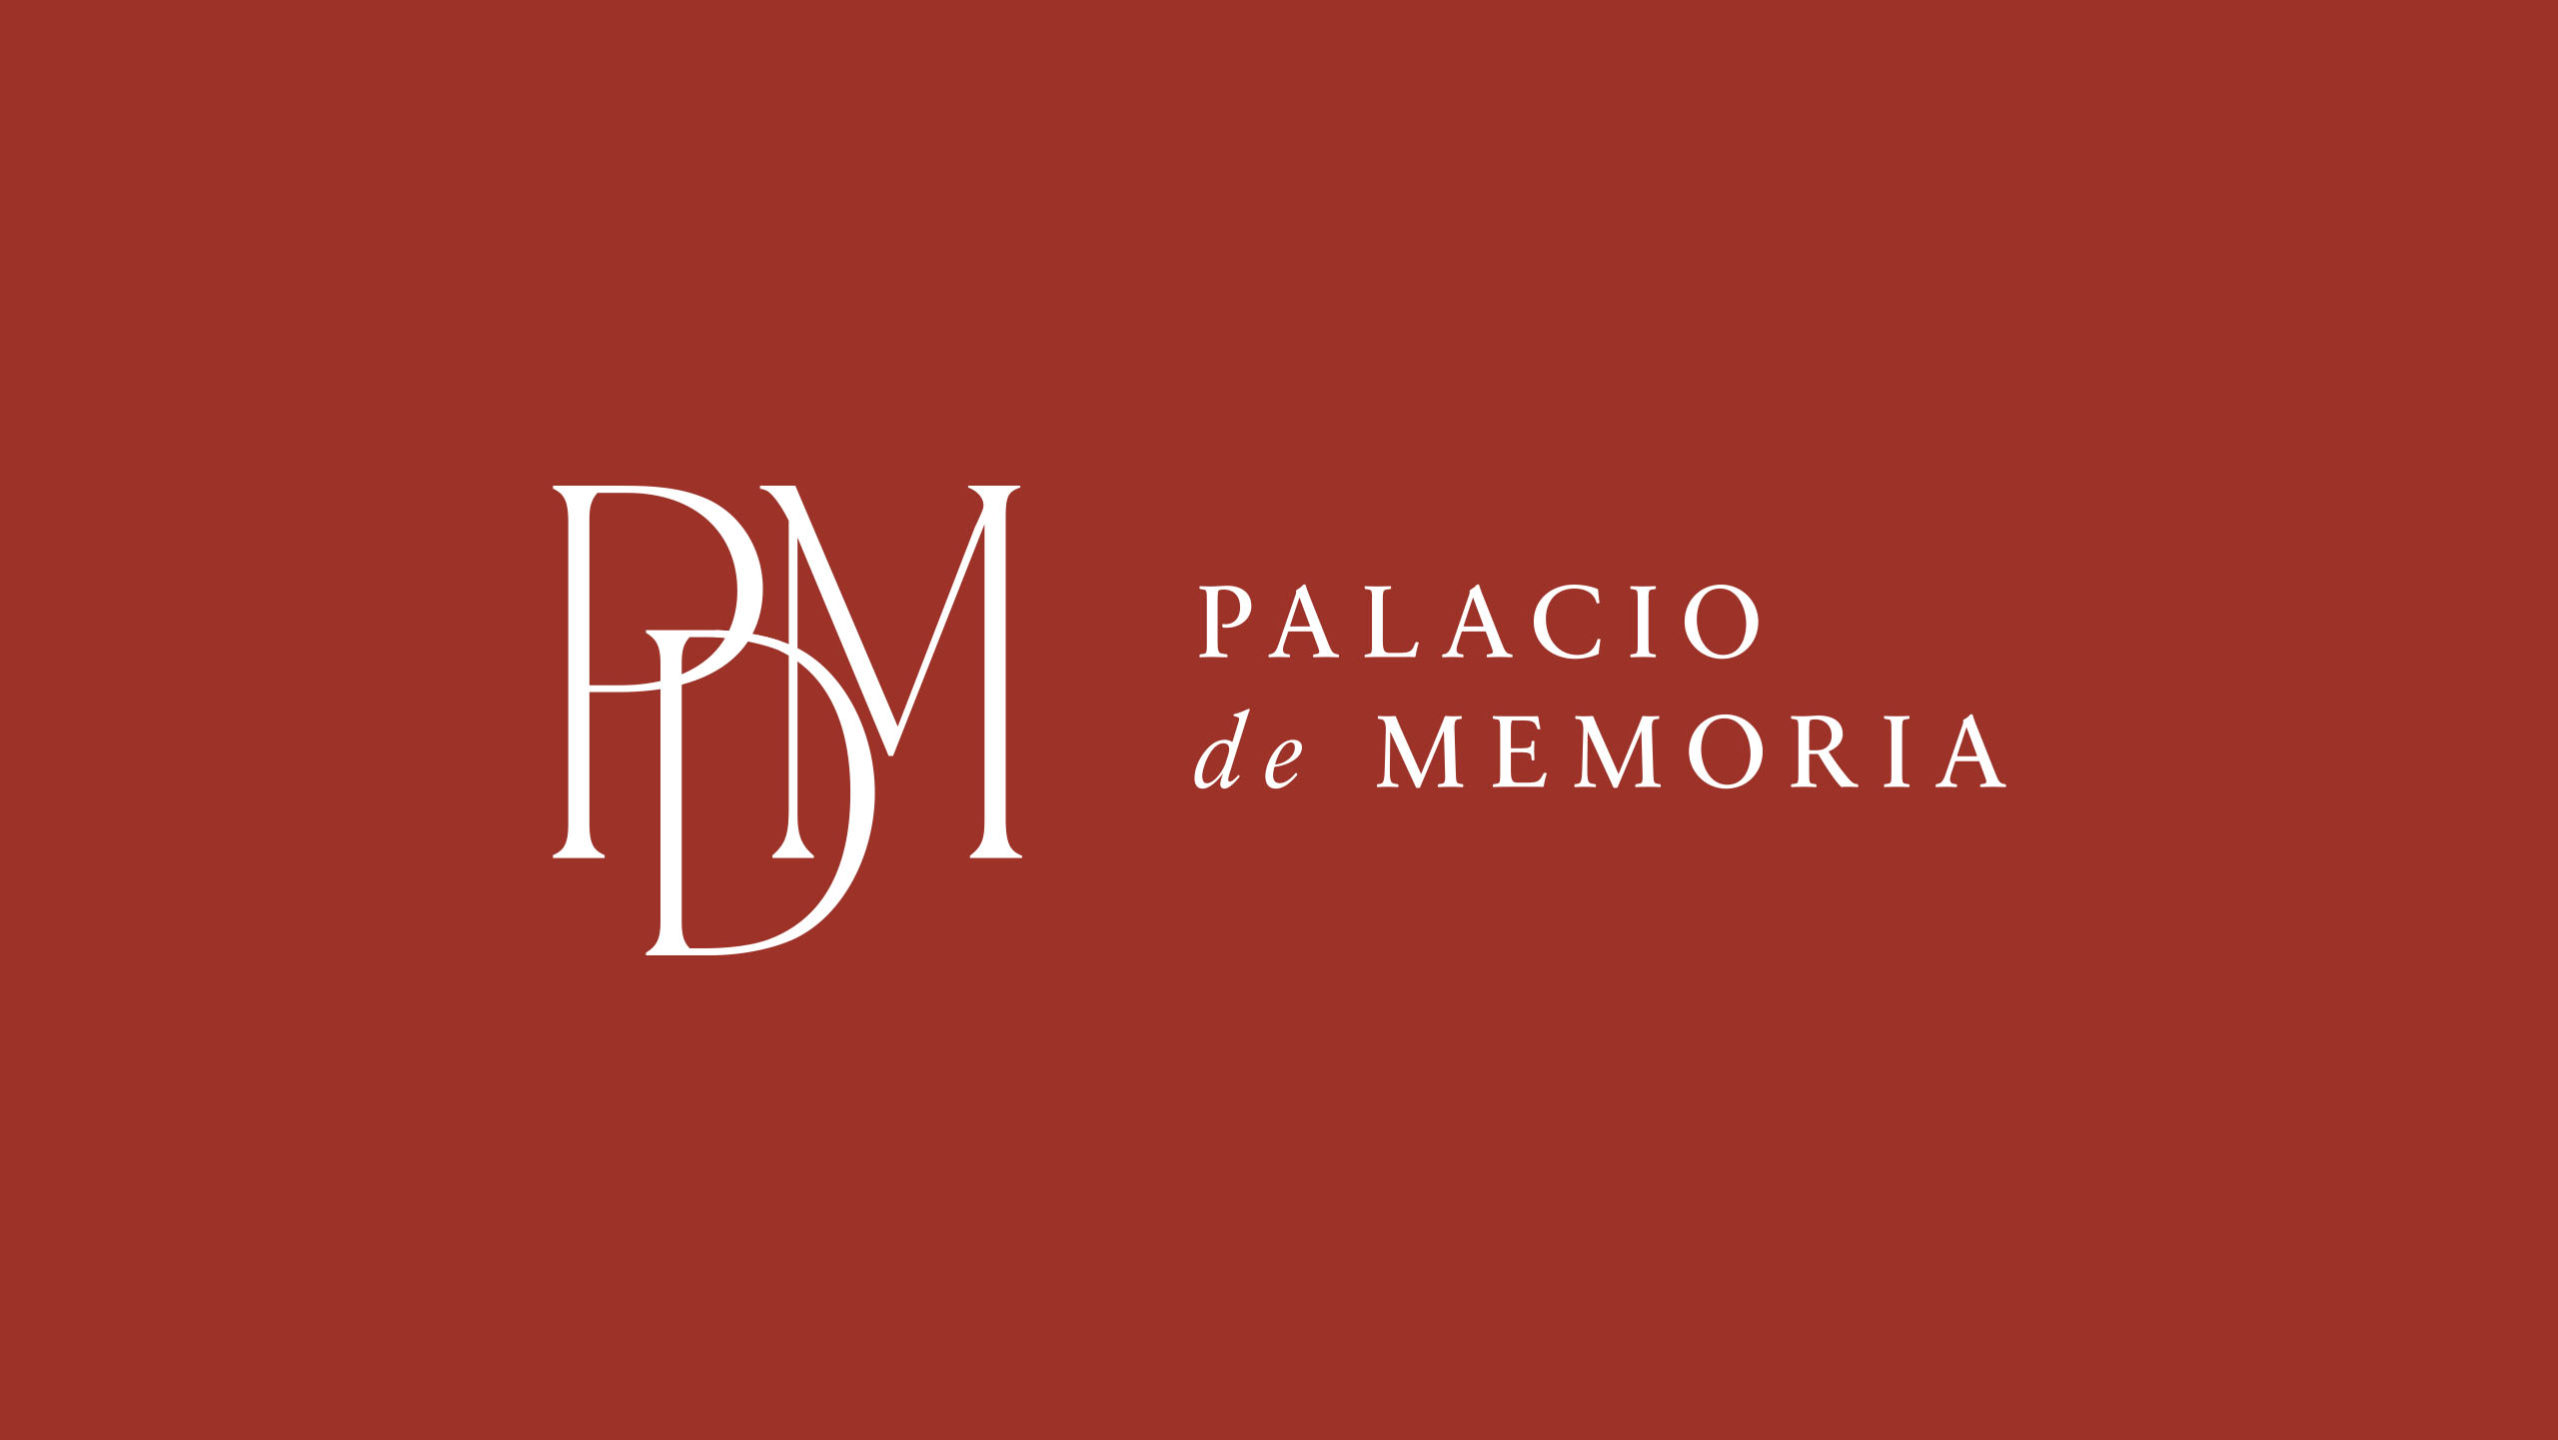 Red and white logo type designed for for culture and events venue Palacio de Memoria